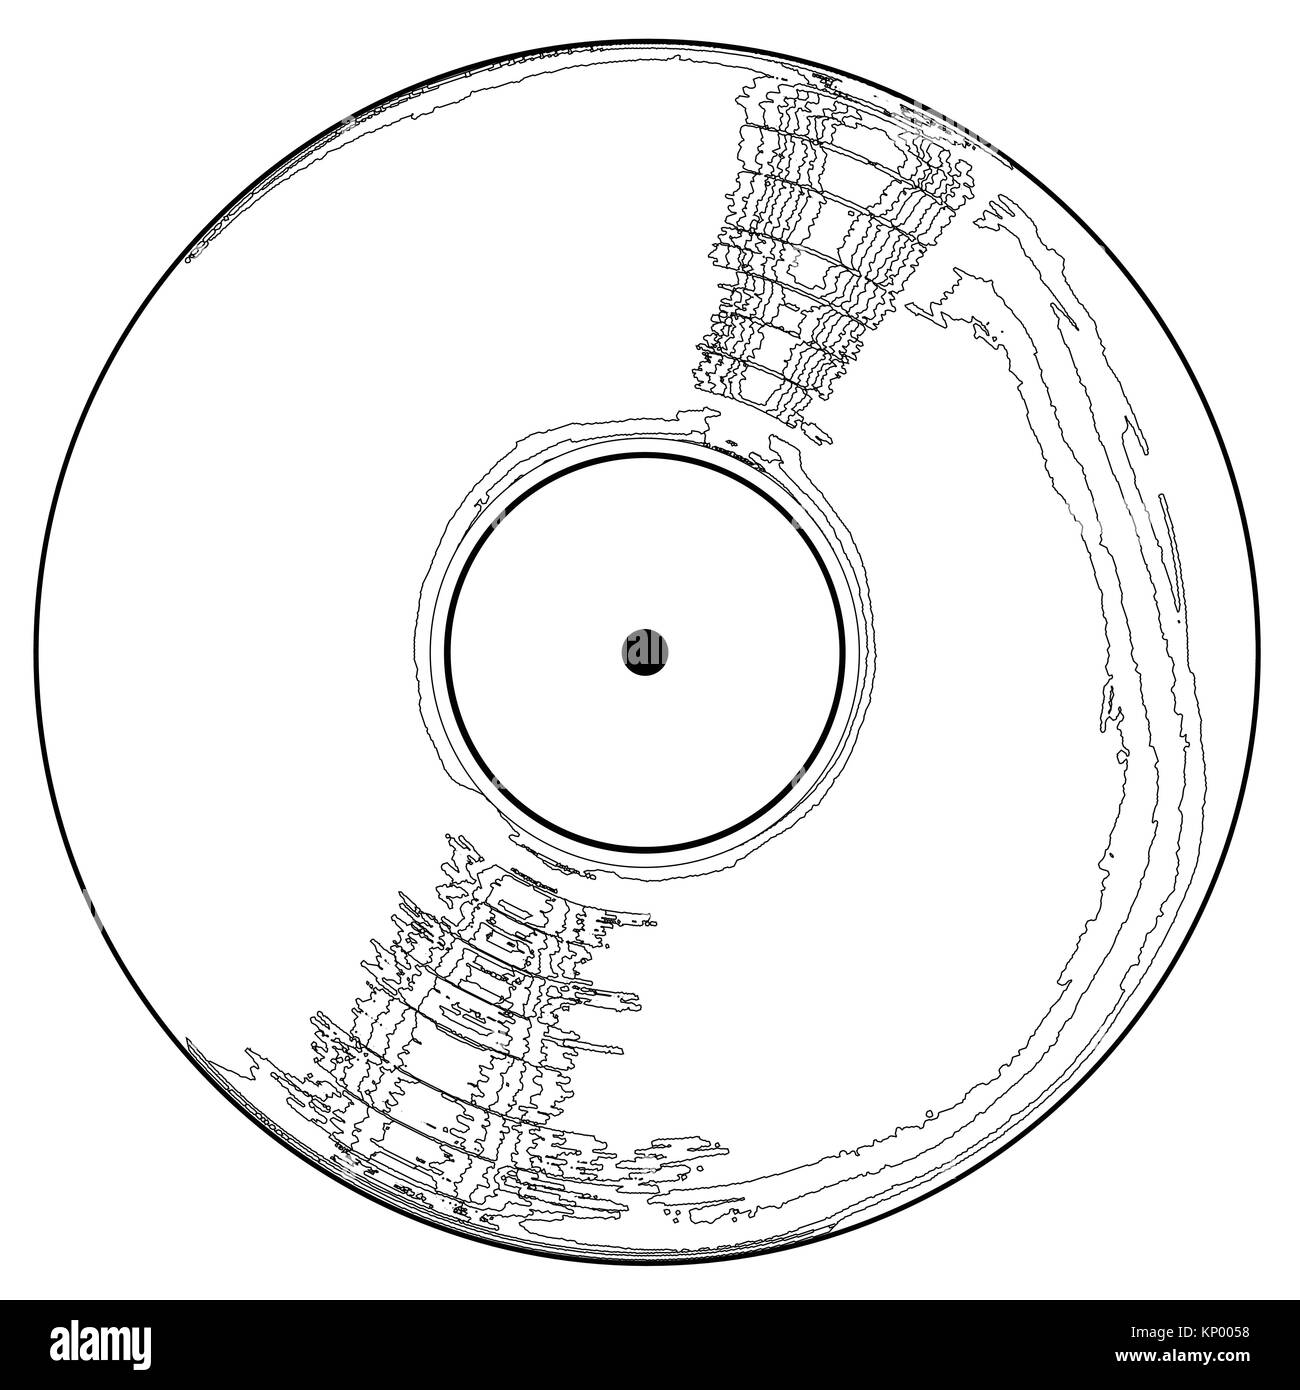 Vector Hand Drawn Sketch Of Vinyl Record In Ink Hand Drawn Style Isolated  On White Royalty Free SVG Klipartlar Vektör Çizimler ve Stok Çizim  Image 85537014